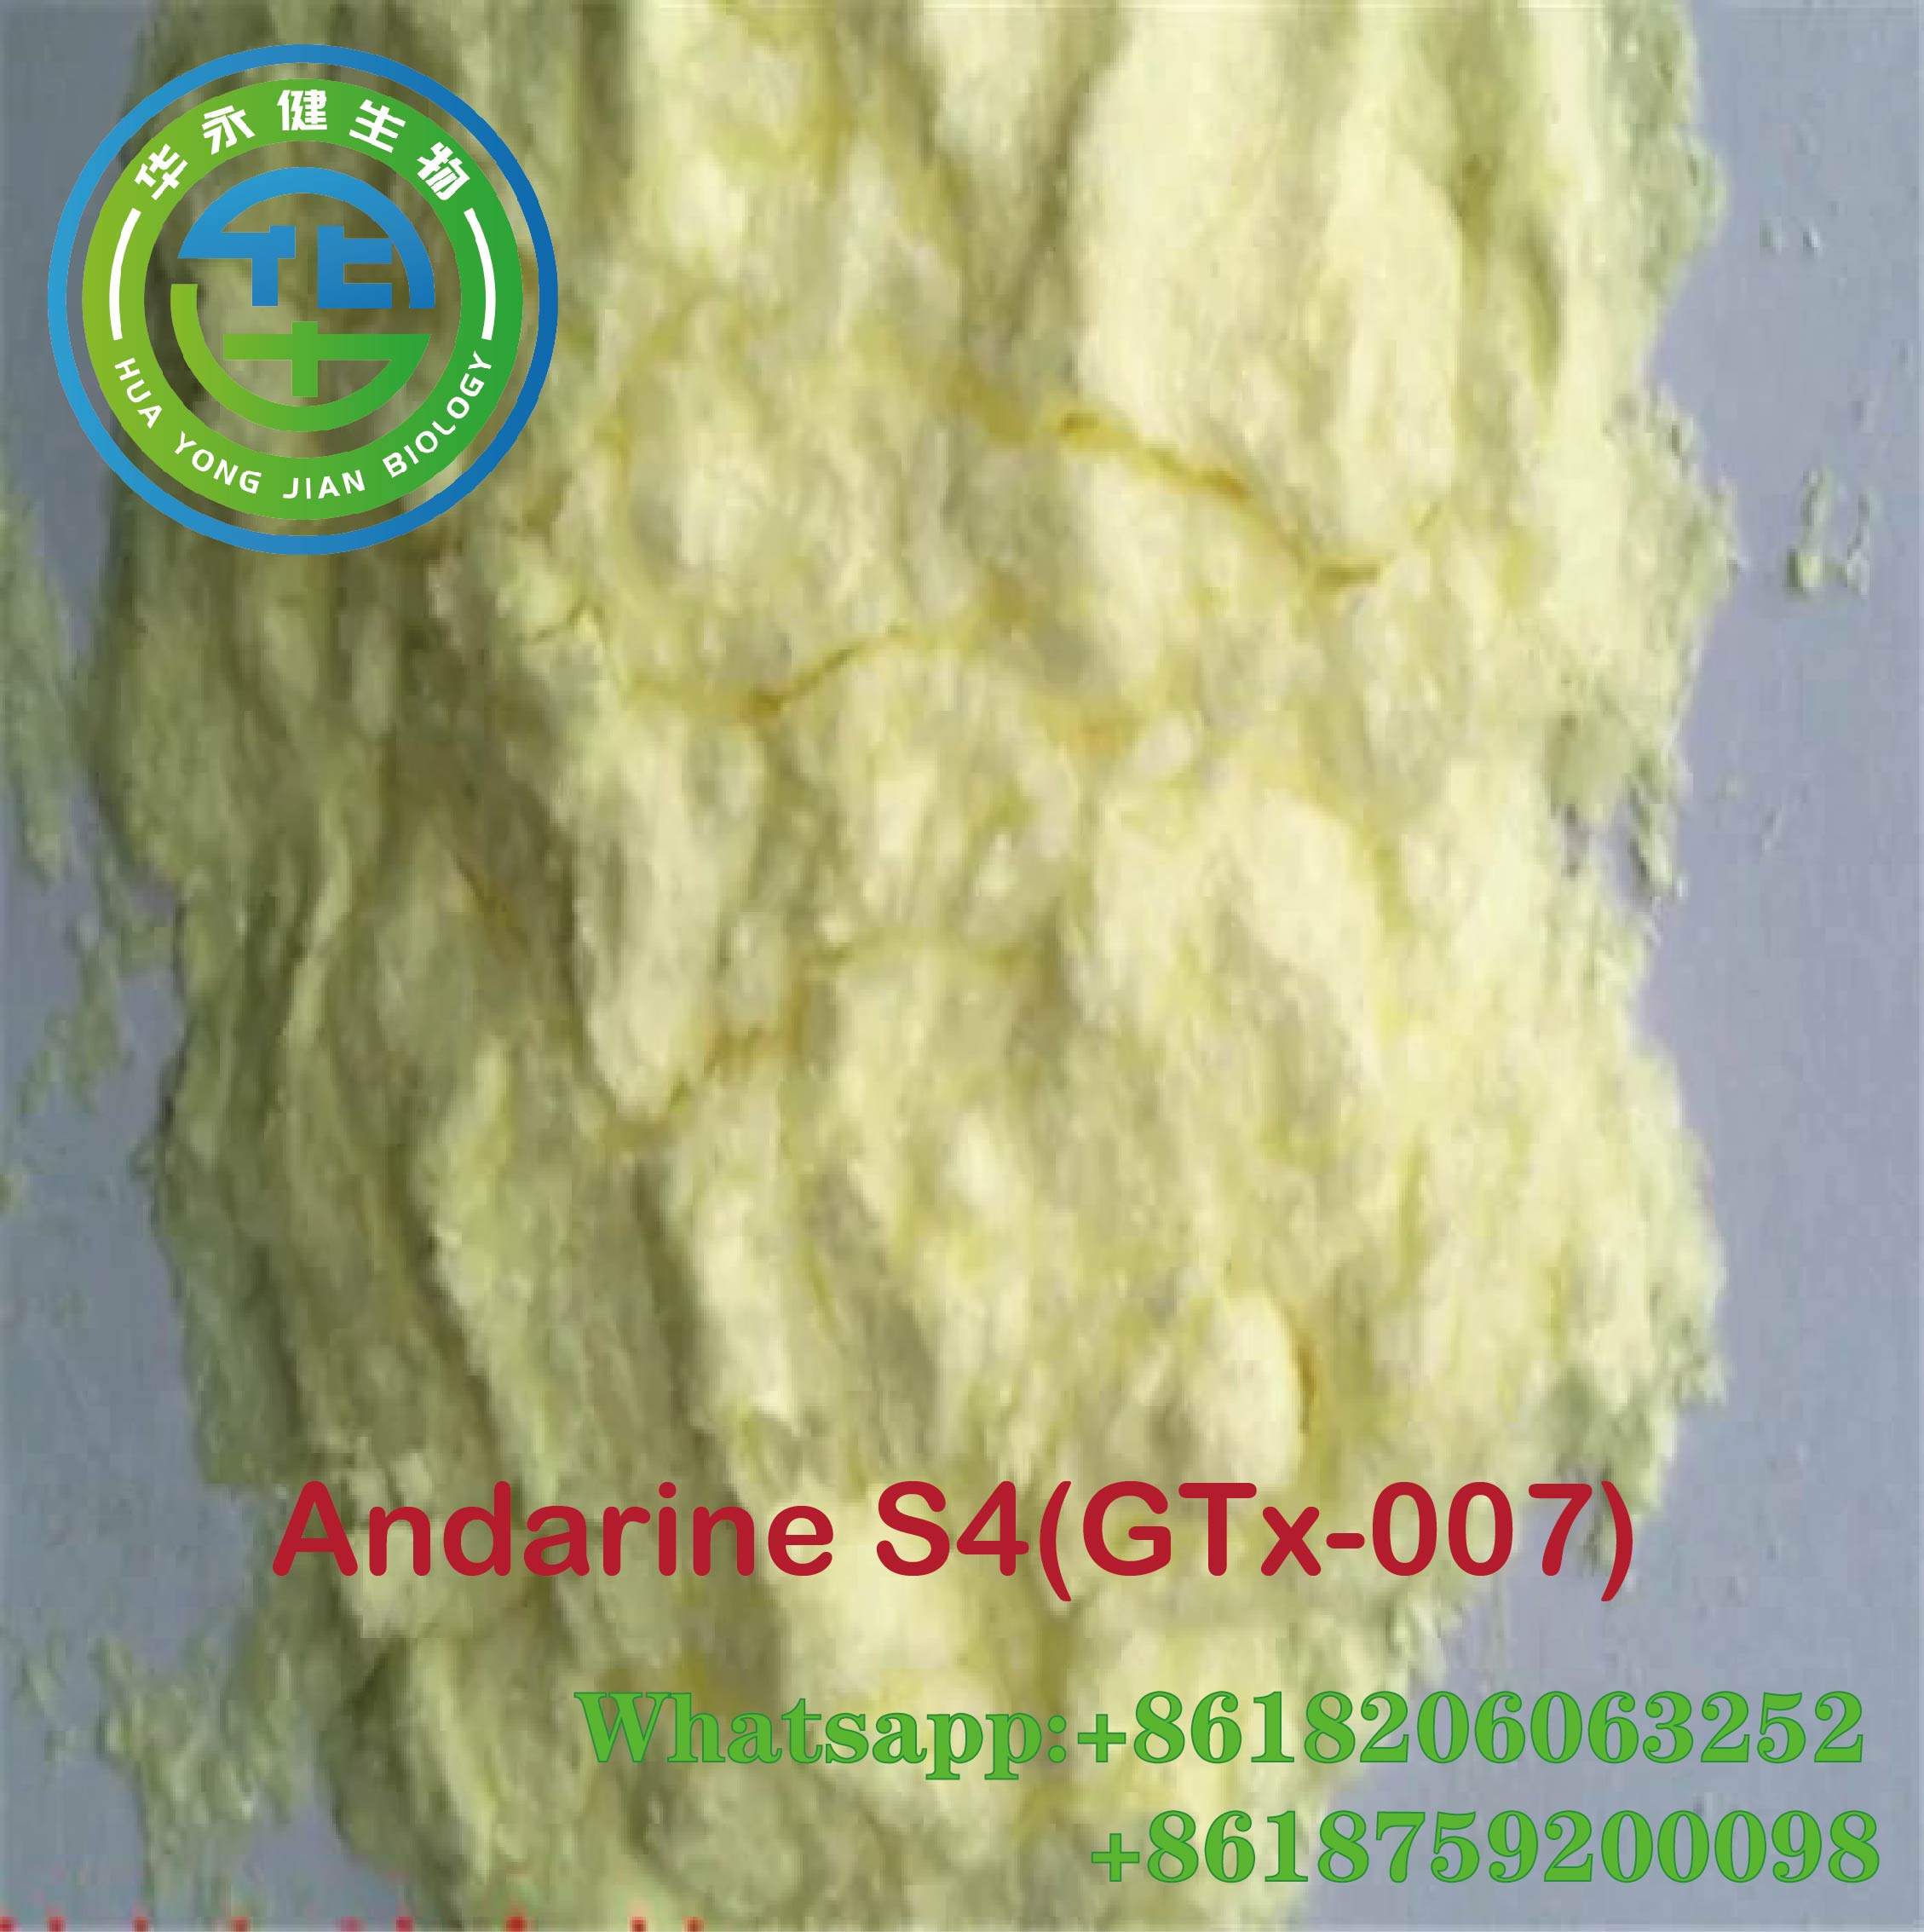 99% Legal SARMs Steroids Andarine S4 Raw Powder for Fat Cutting CAS 401900-40-1